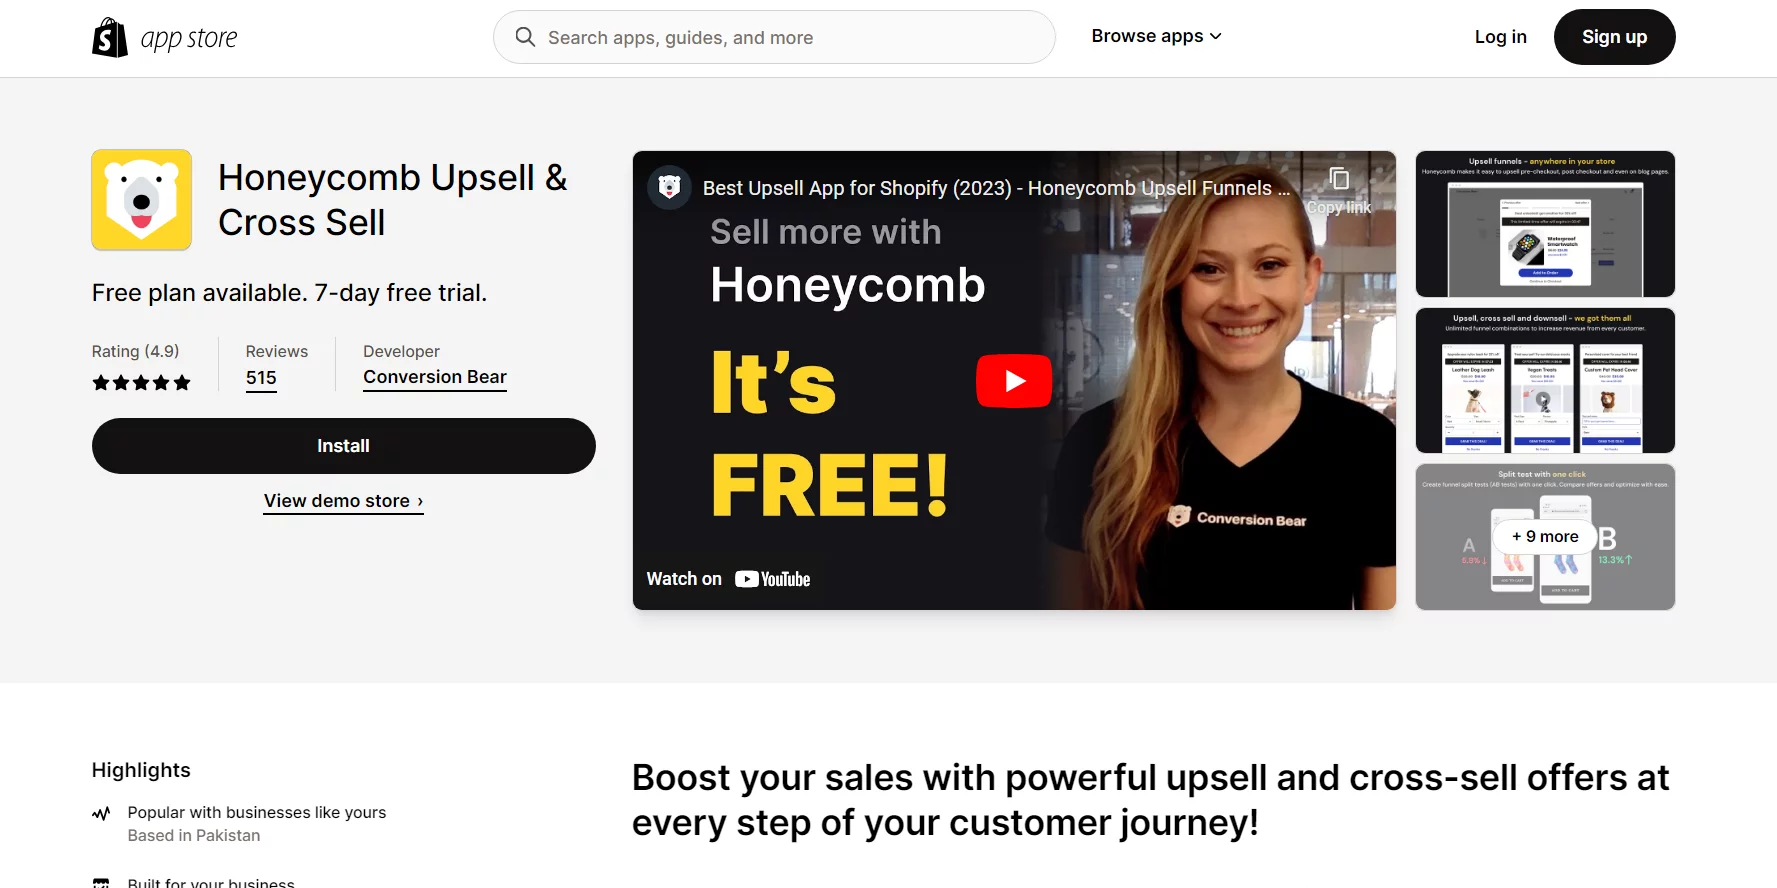 Honeycomb Upsell & Cross Sell